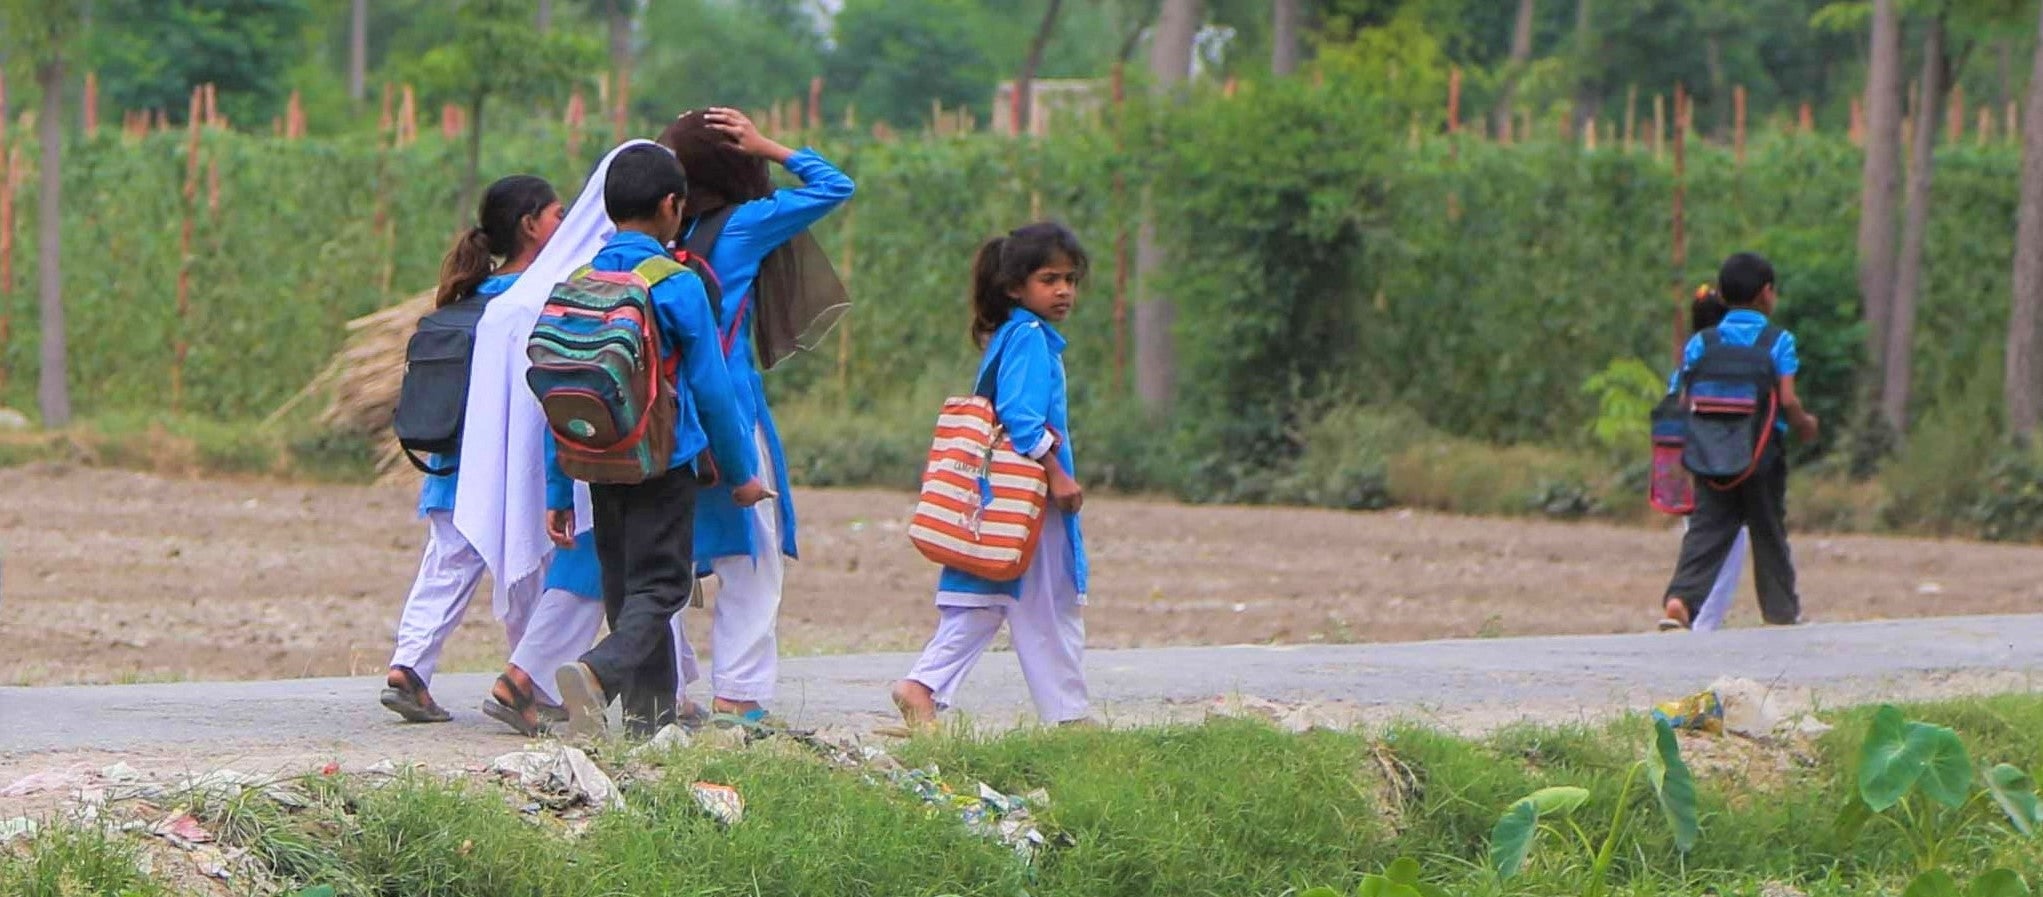 Children walking to school in Punjab, Pakistan